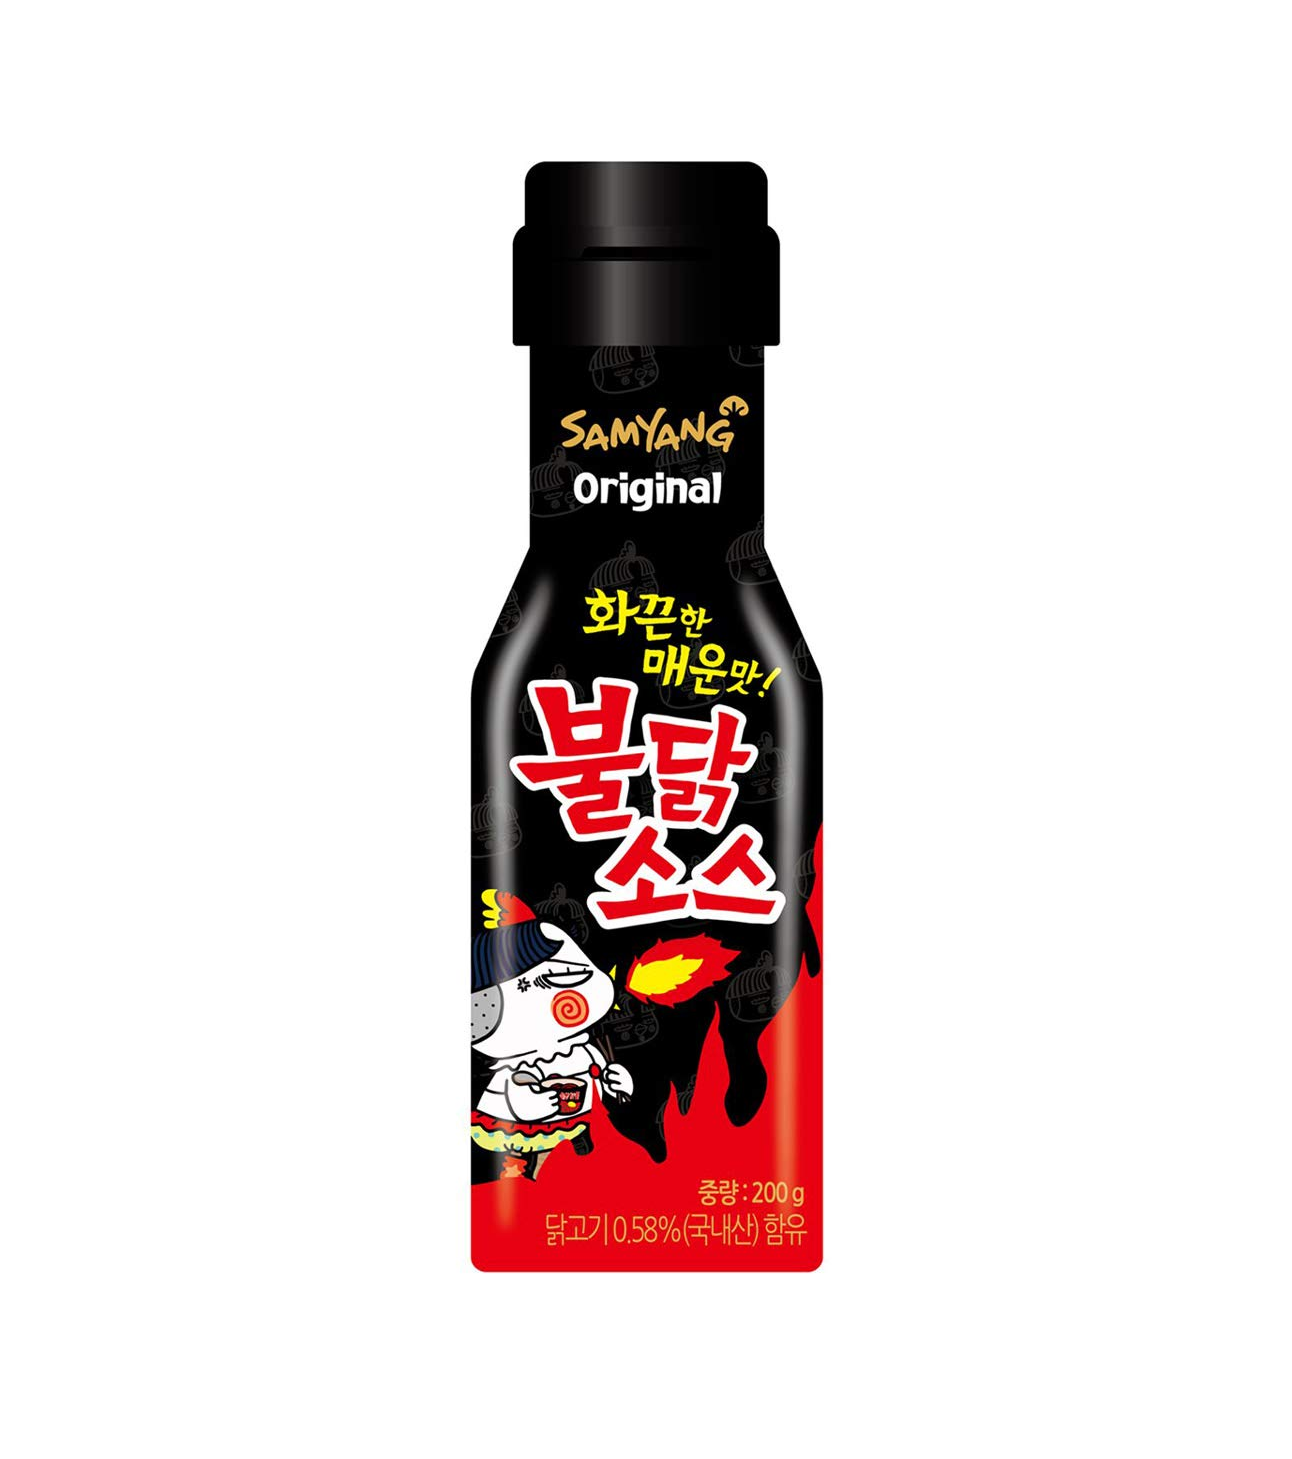 Samyang Hot chicken flavor sauce